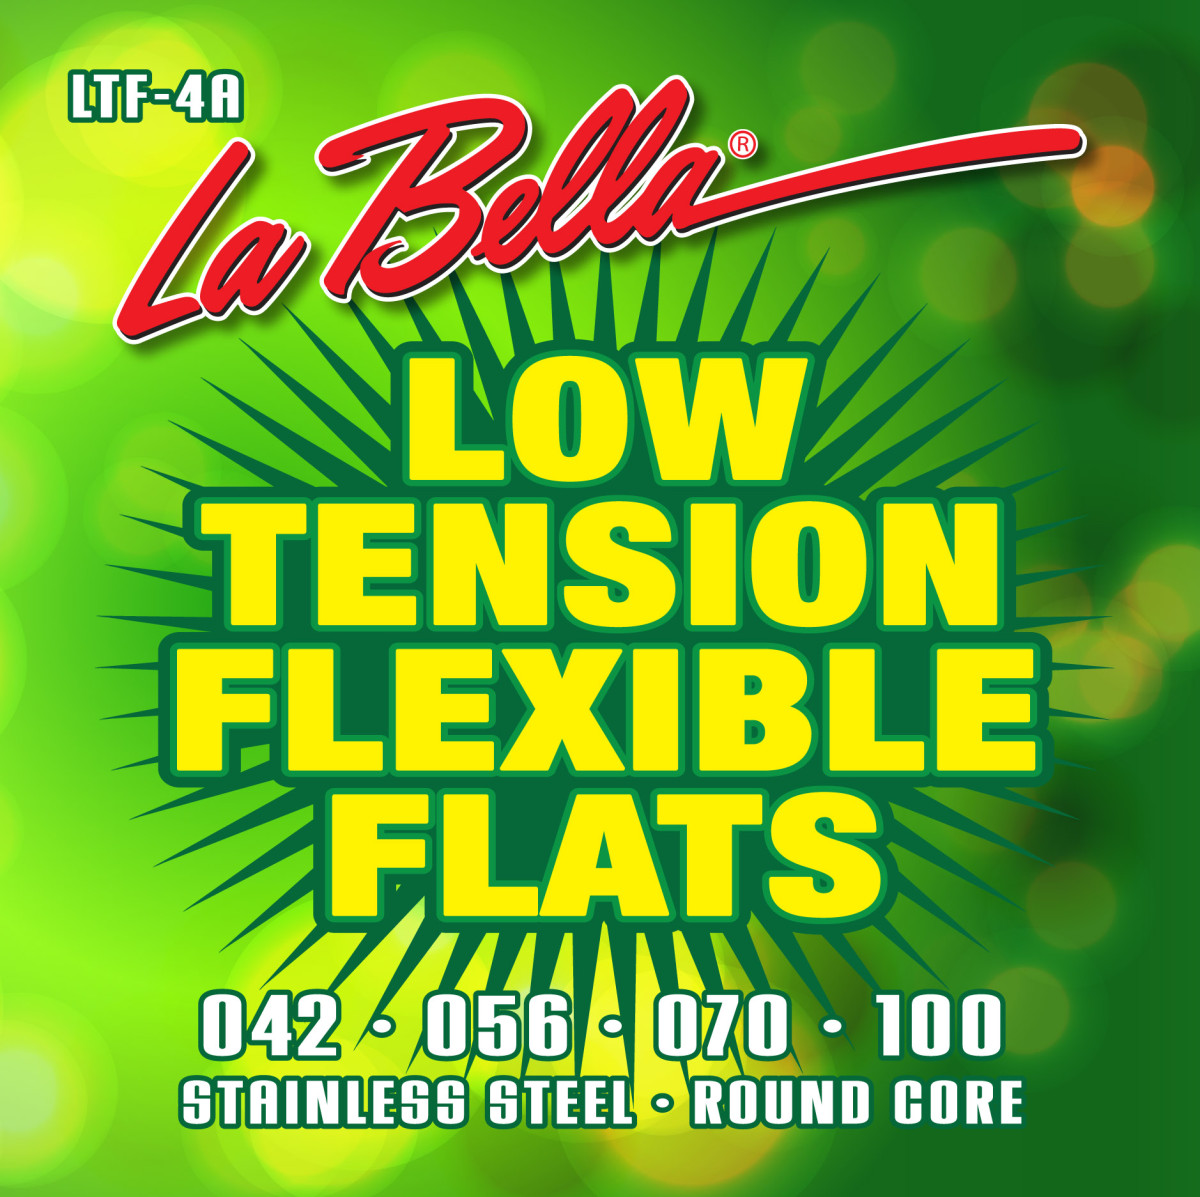 LTF-4A Low Tension Flexible Flats